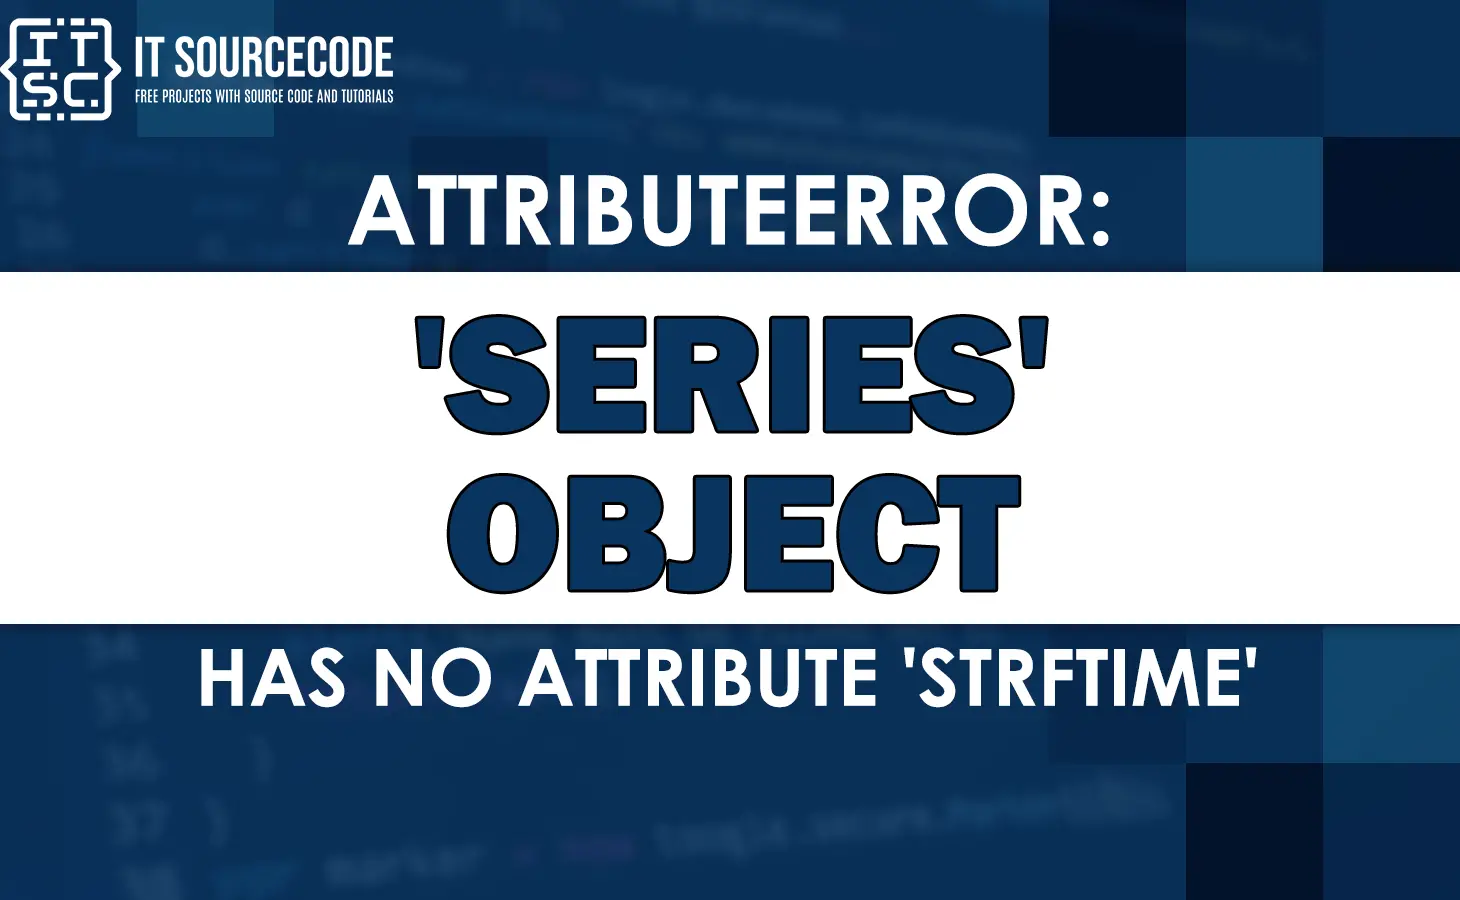 Attributeerror: series object has no attribute strftime